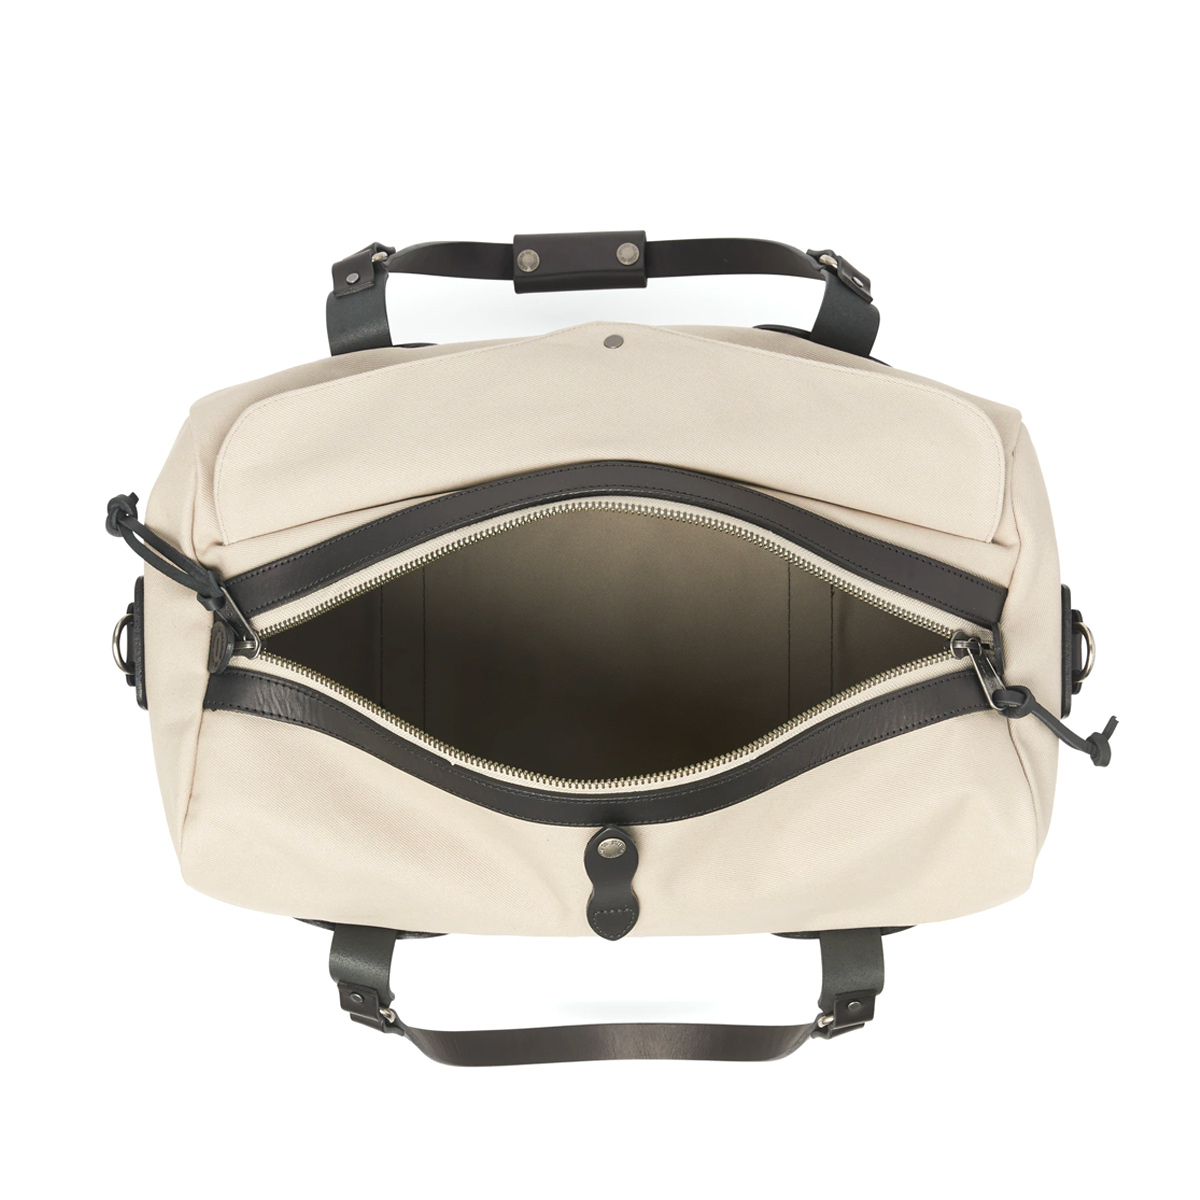 Filson Duffle Bag Medium Twine, perfect travel-bag